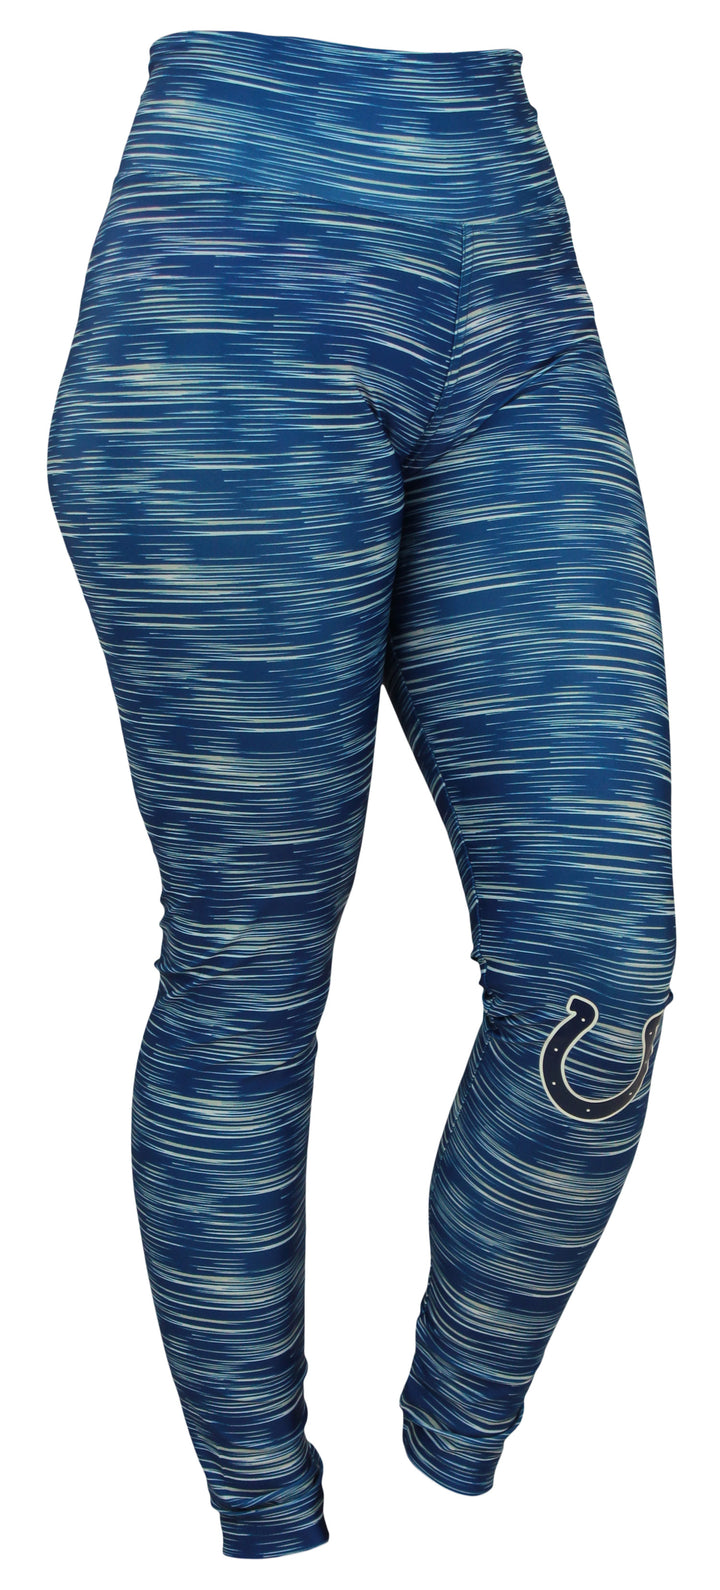 Zubaz NFL Football Women's Indianapolis Colts Space Dye Legging